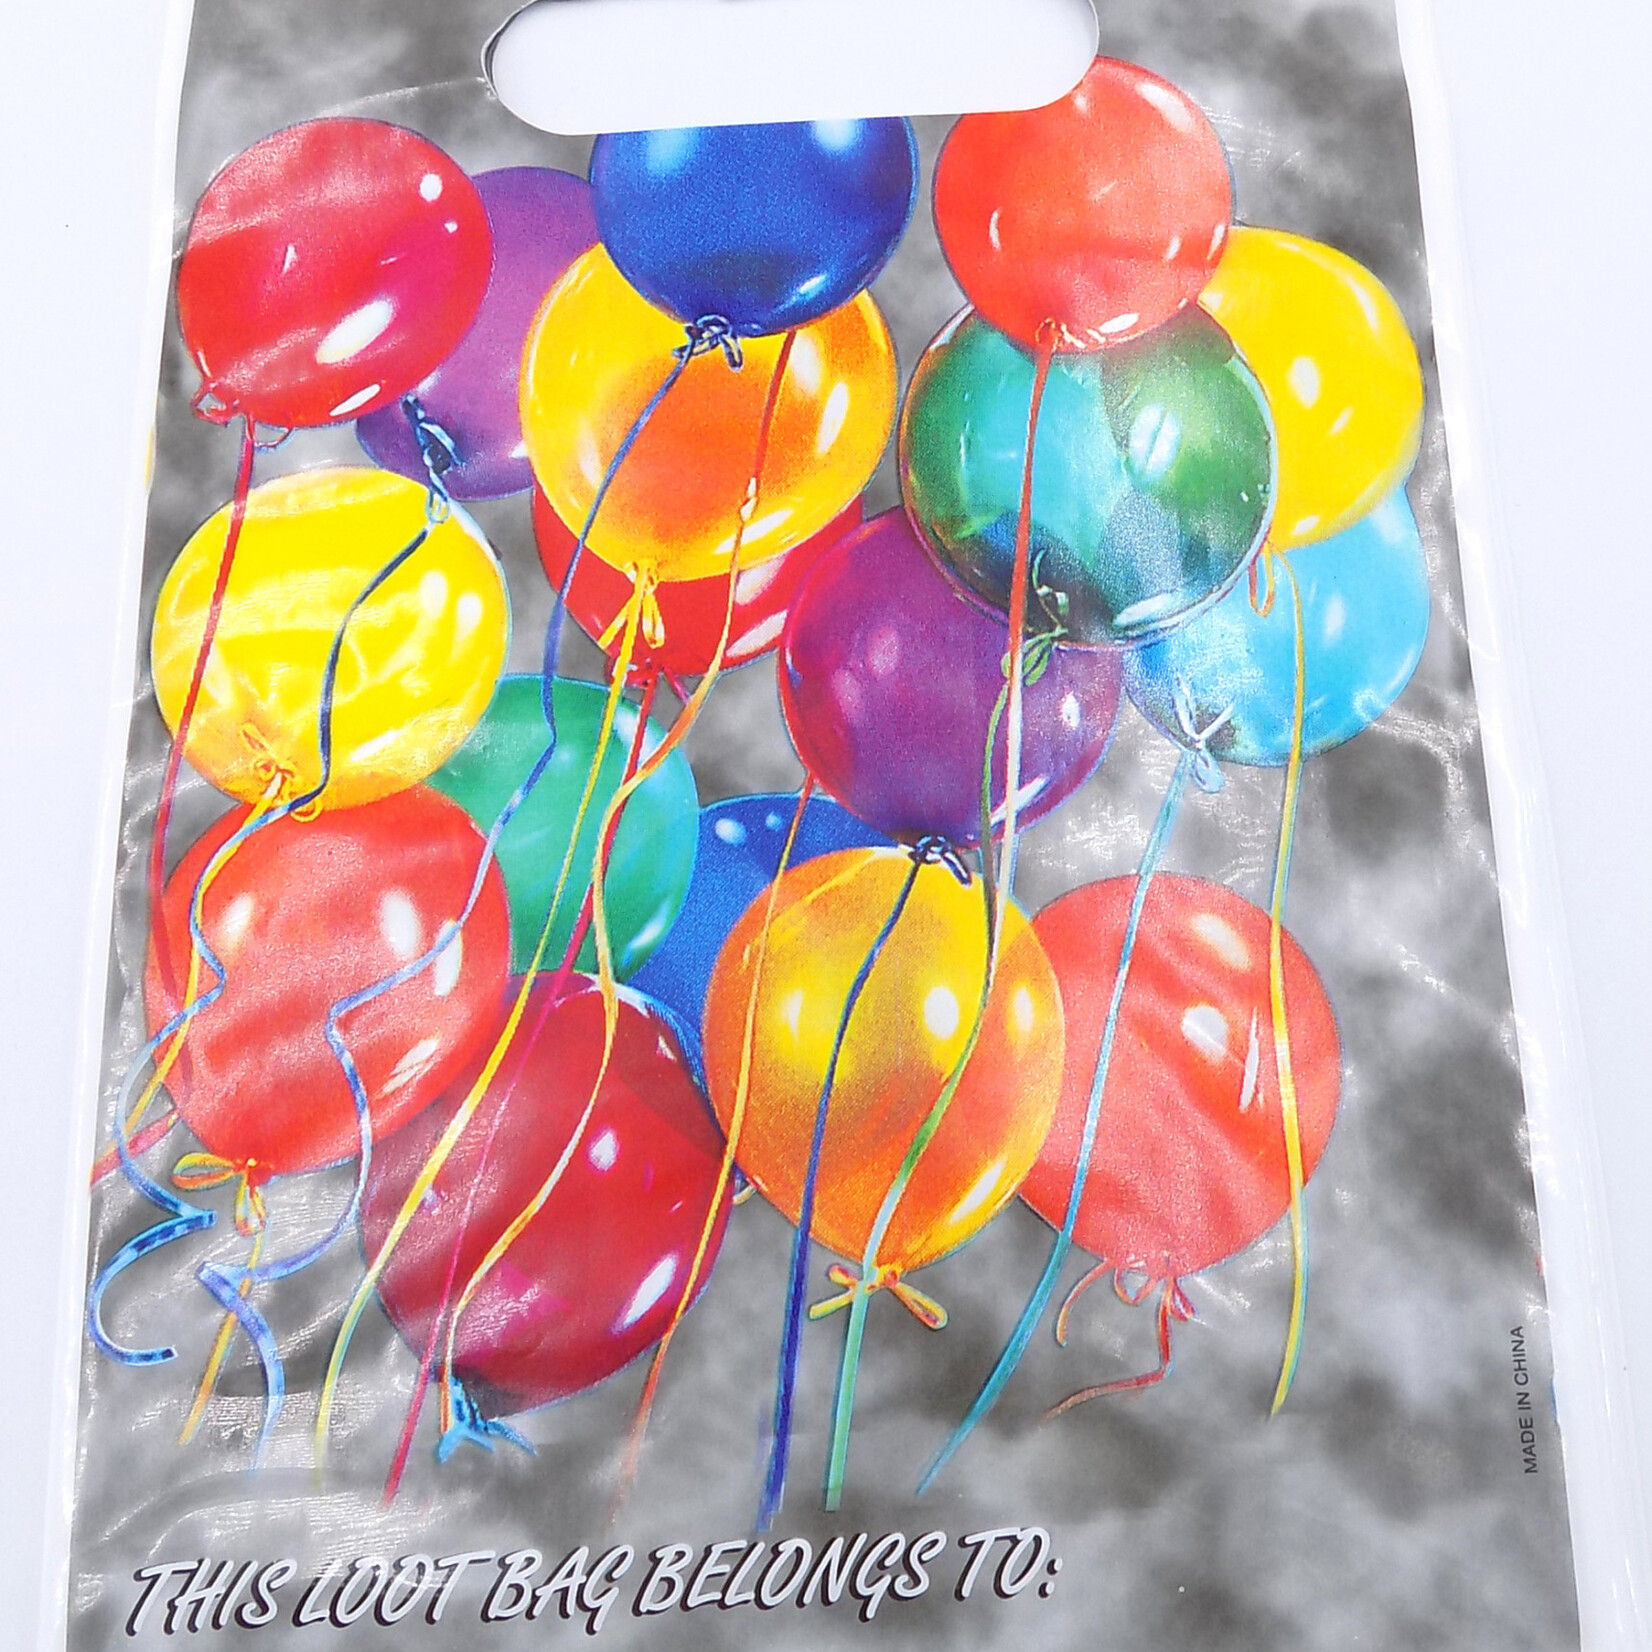 10 Party Loots Bag - Balloon Print